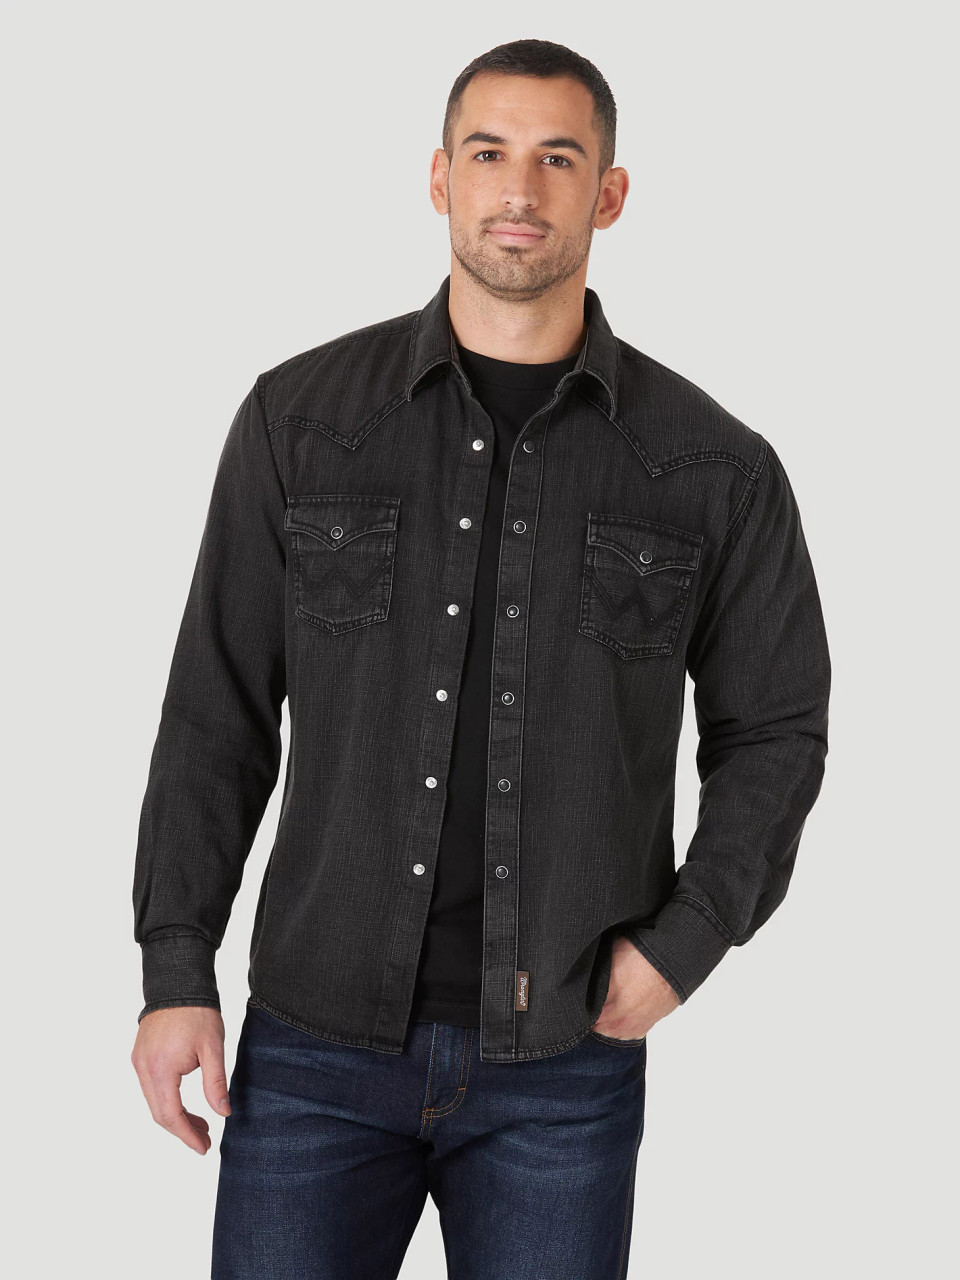 Wrangler Men's Shirt Long Sleeve Dark Denim with Snaps MS1041D – Wei's Western  Wear